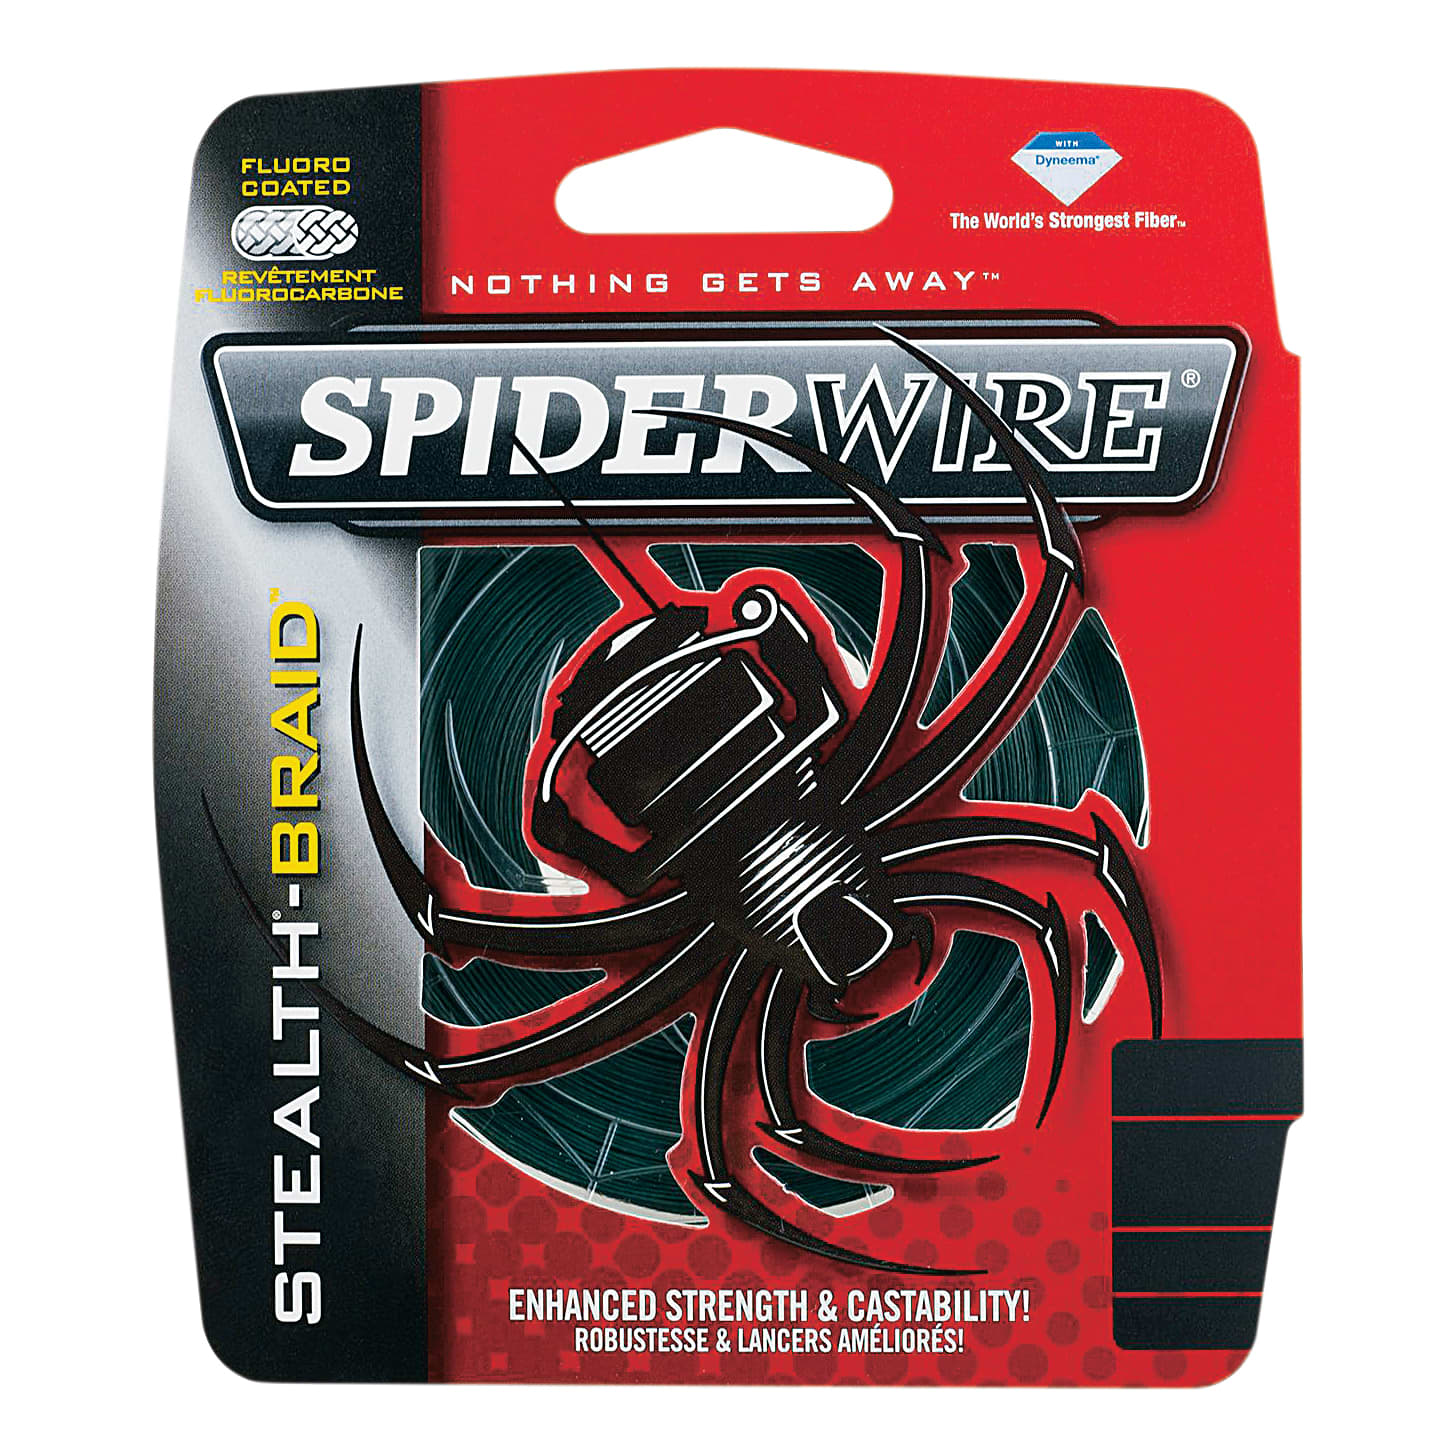 SpiderWire® Stealth Braid Fishing Line - Clear Spool